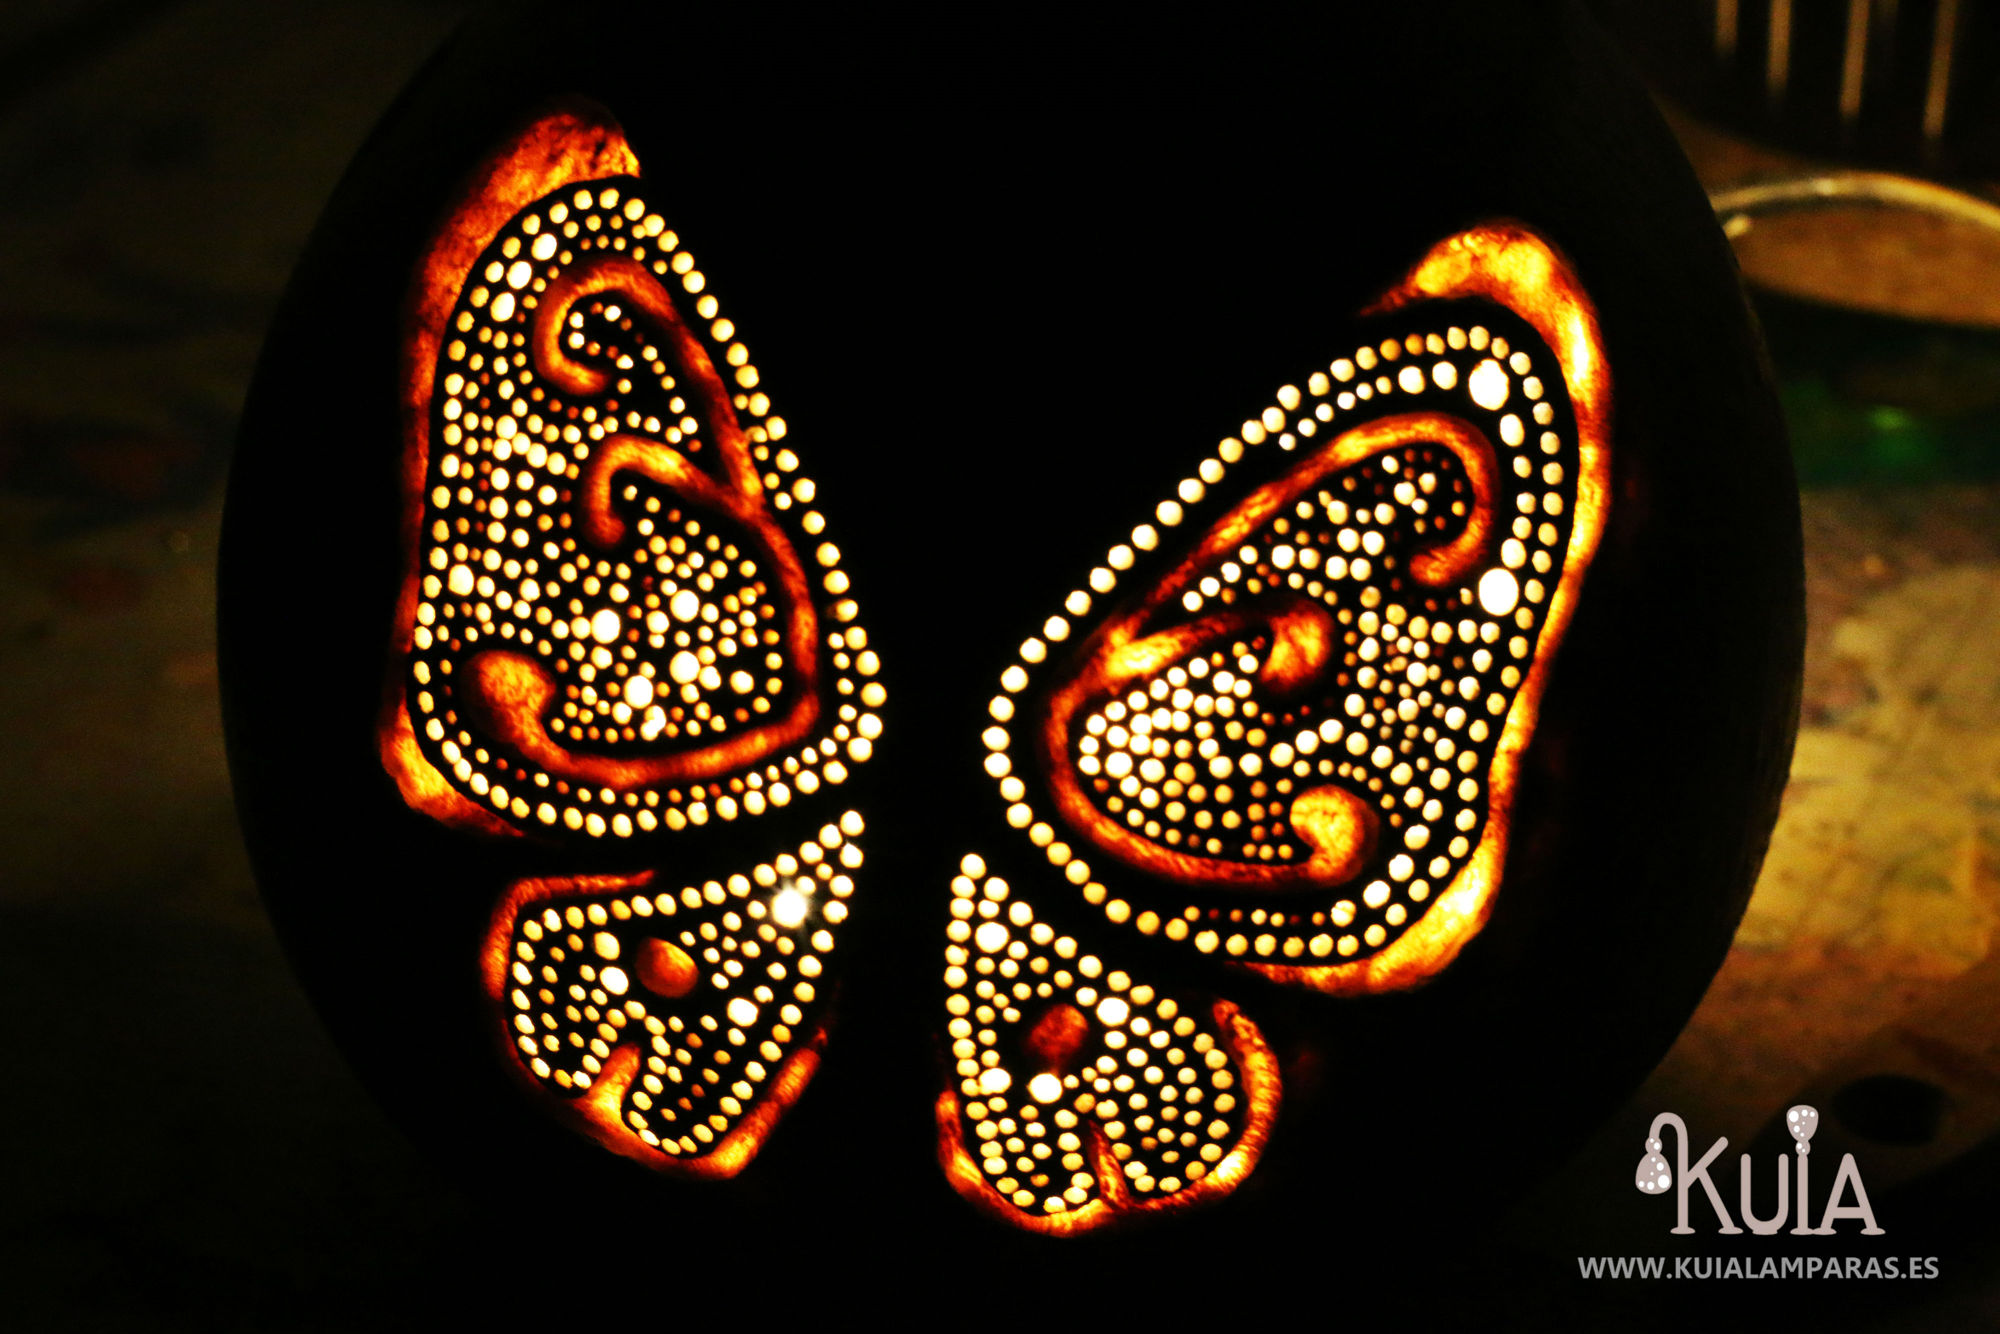 lampara artesanal ecologica con mariposas pinpilinpauxa